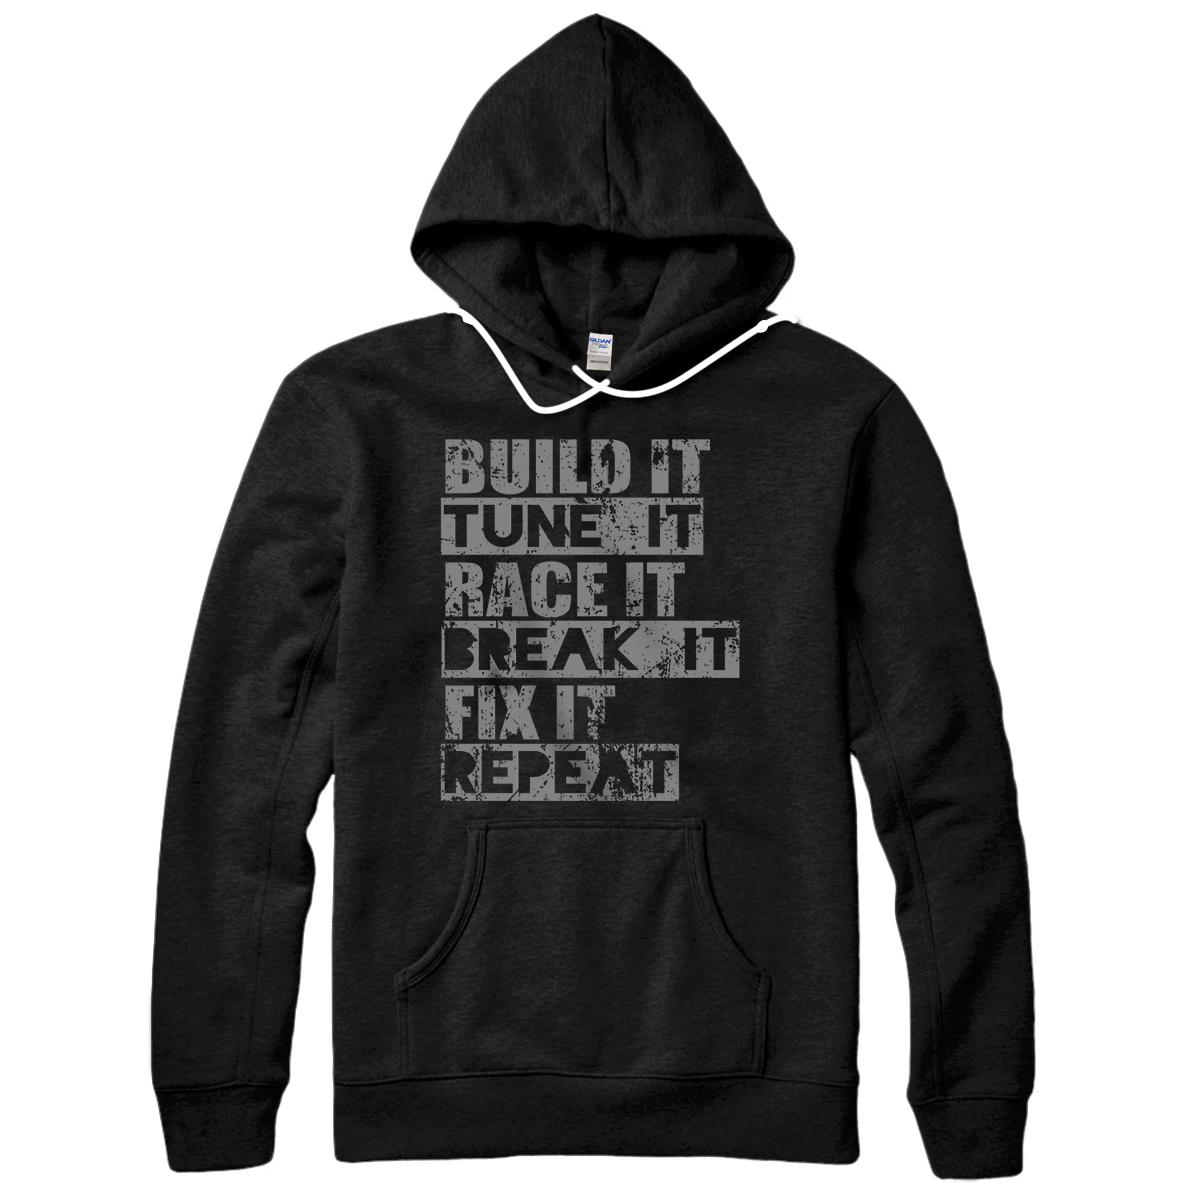 Personalized Build It Tune It Race It Break It Fix It Repeat car t shirts Pullover Hoodie